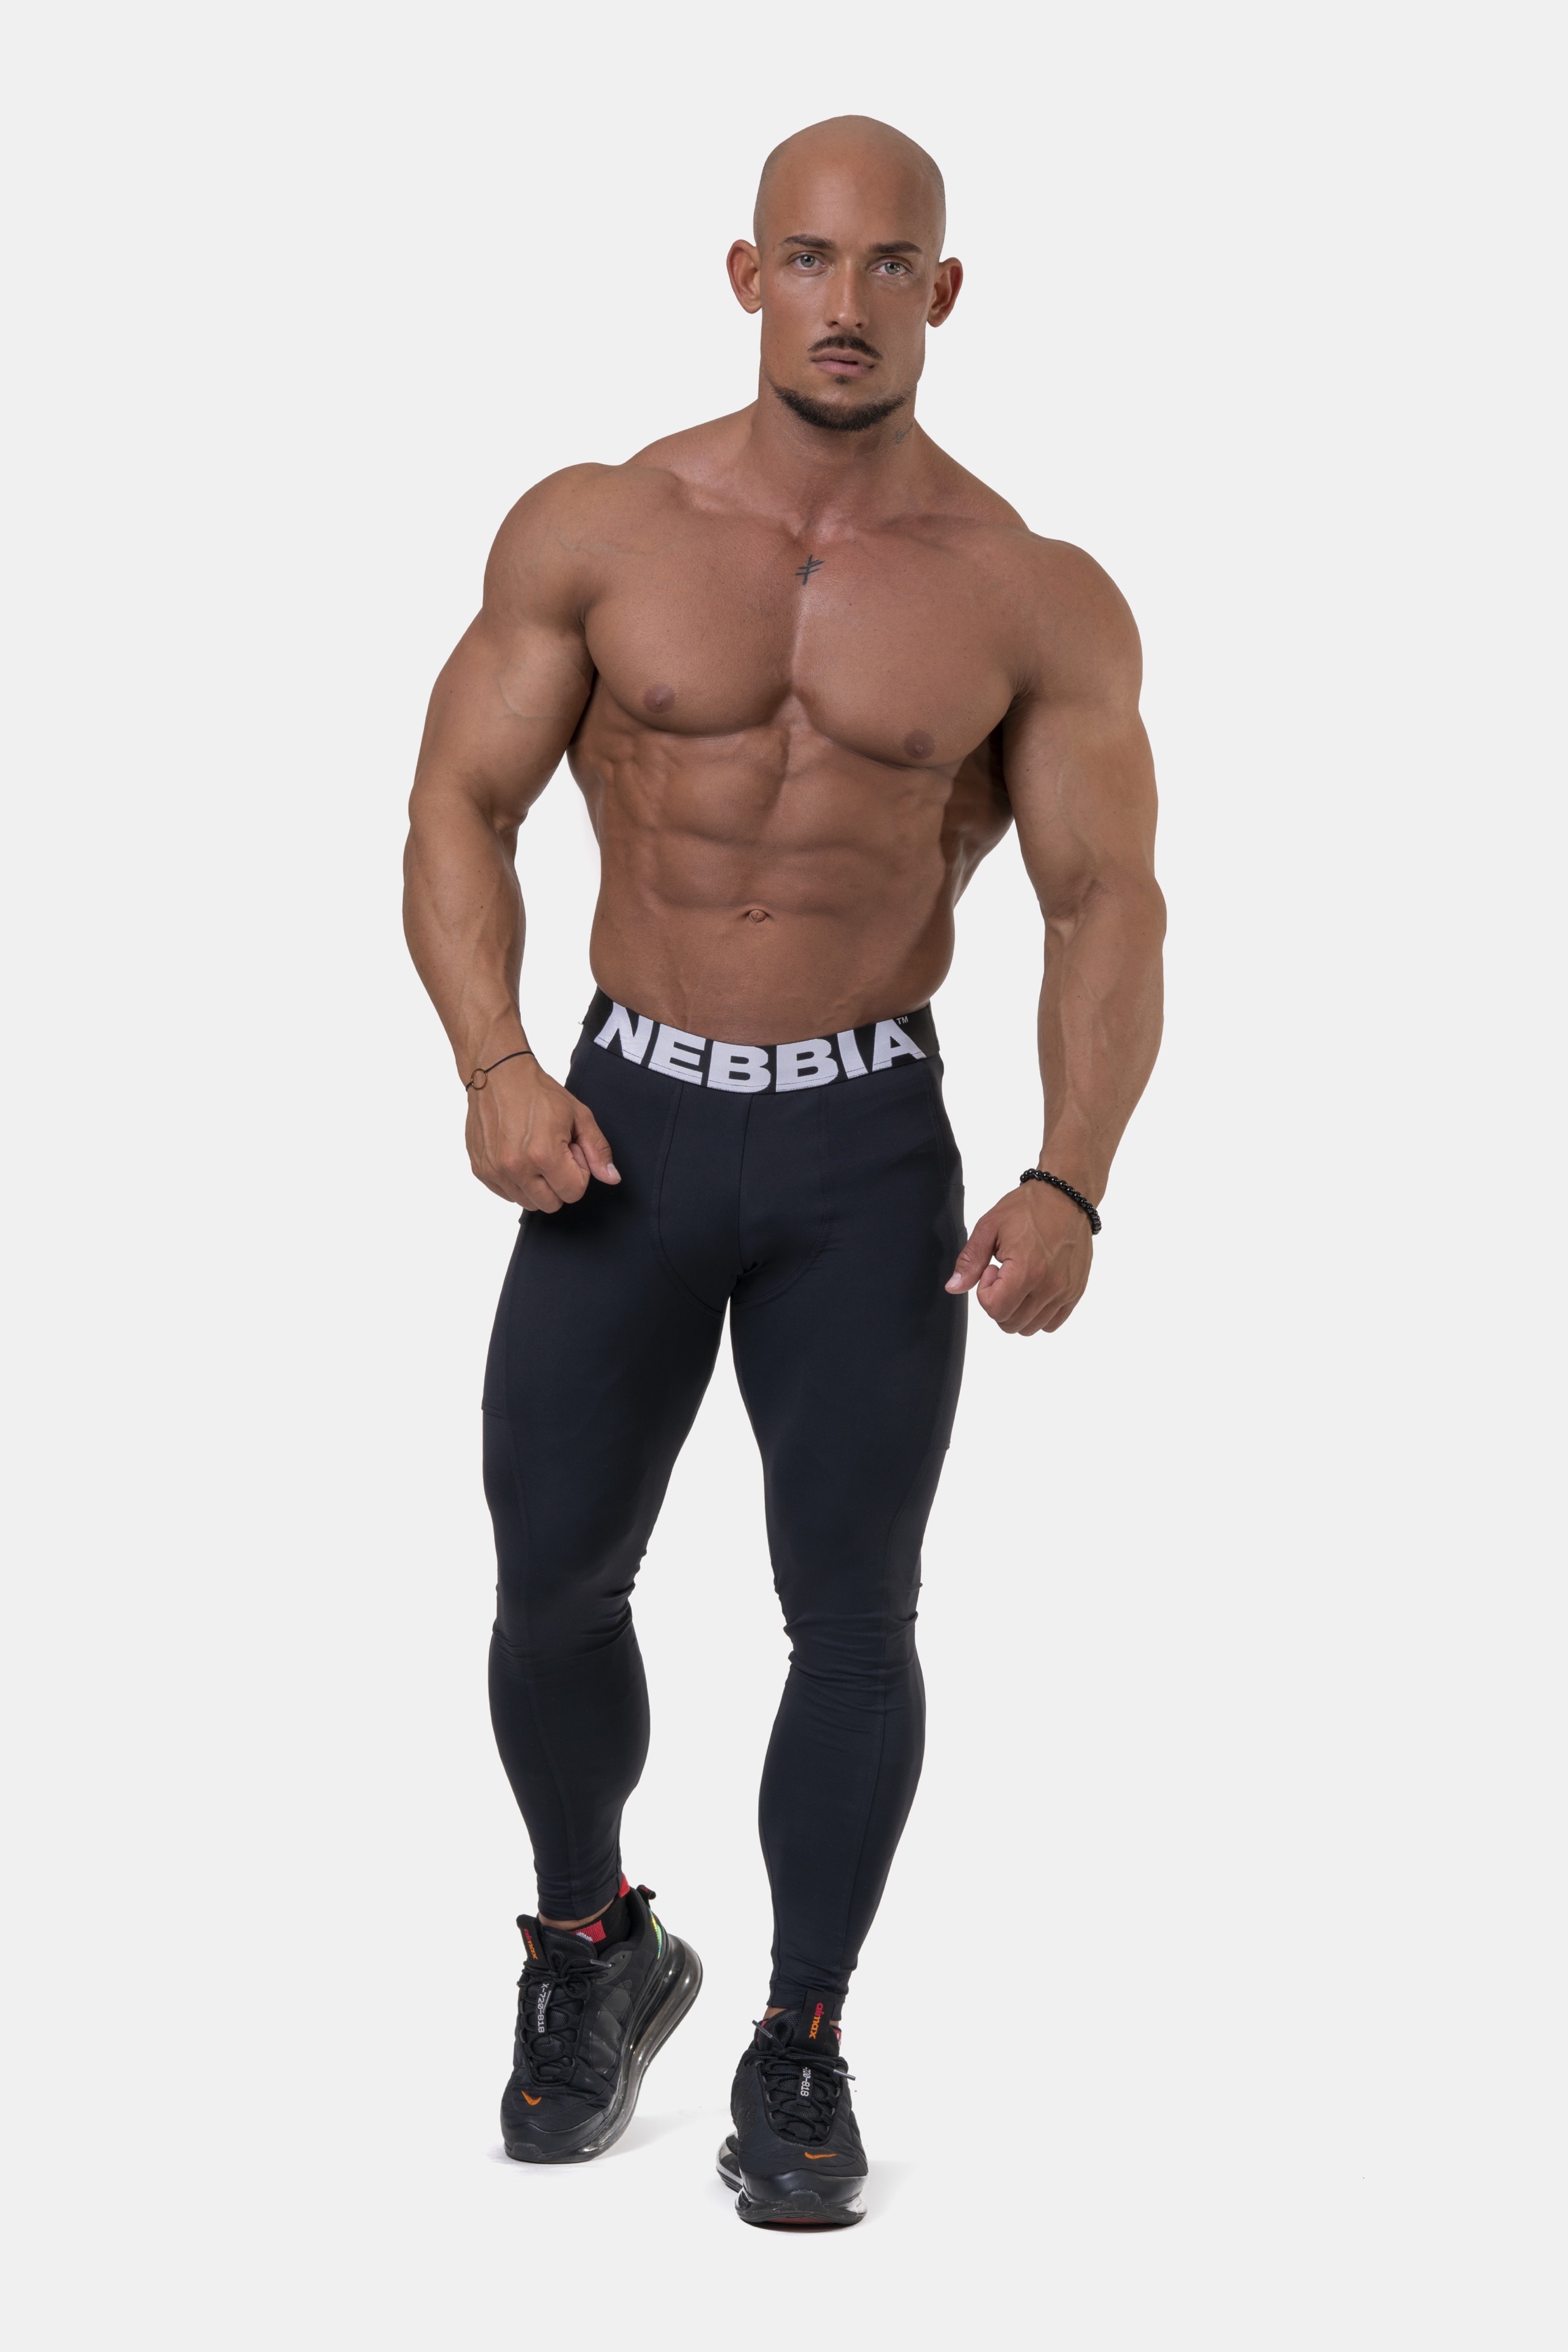 nebbia-ferfi-fitness-leggings-189-black